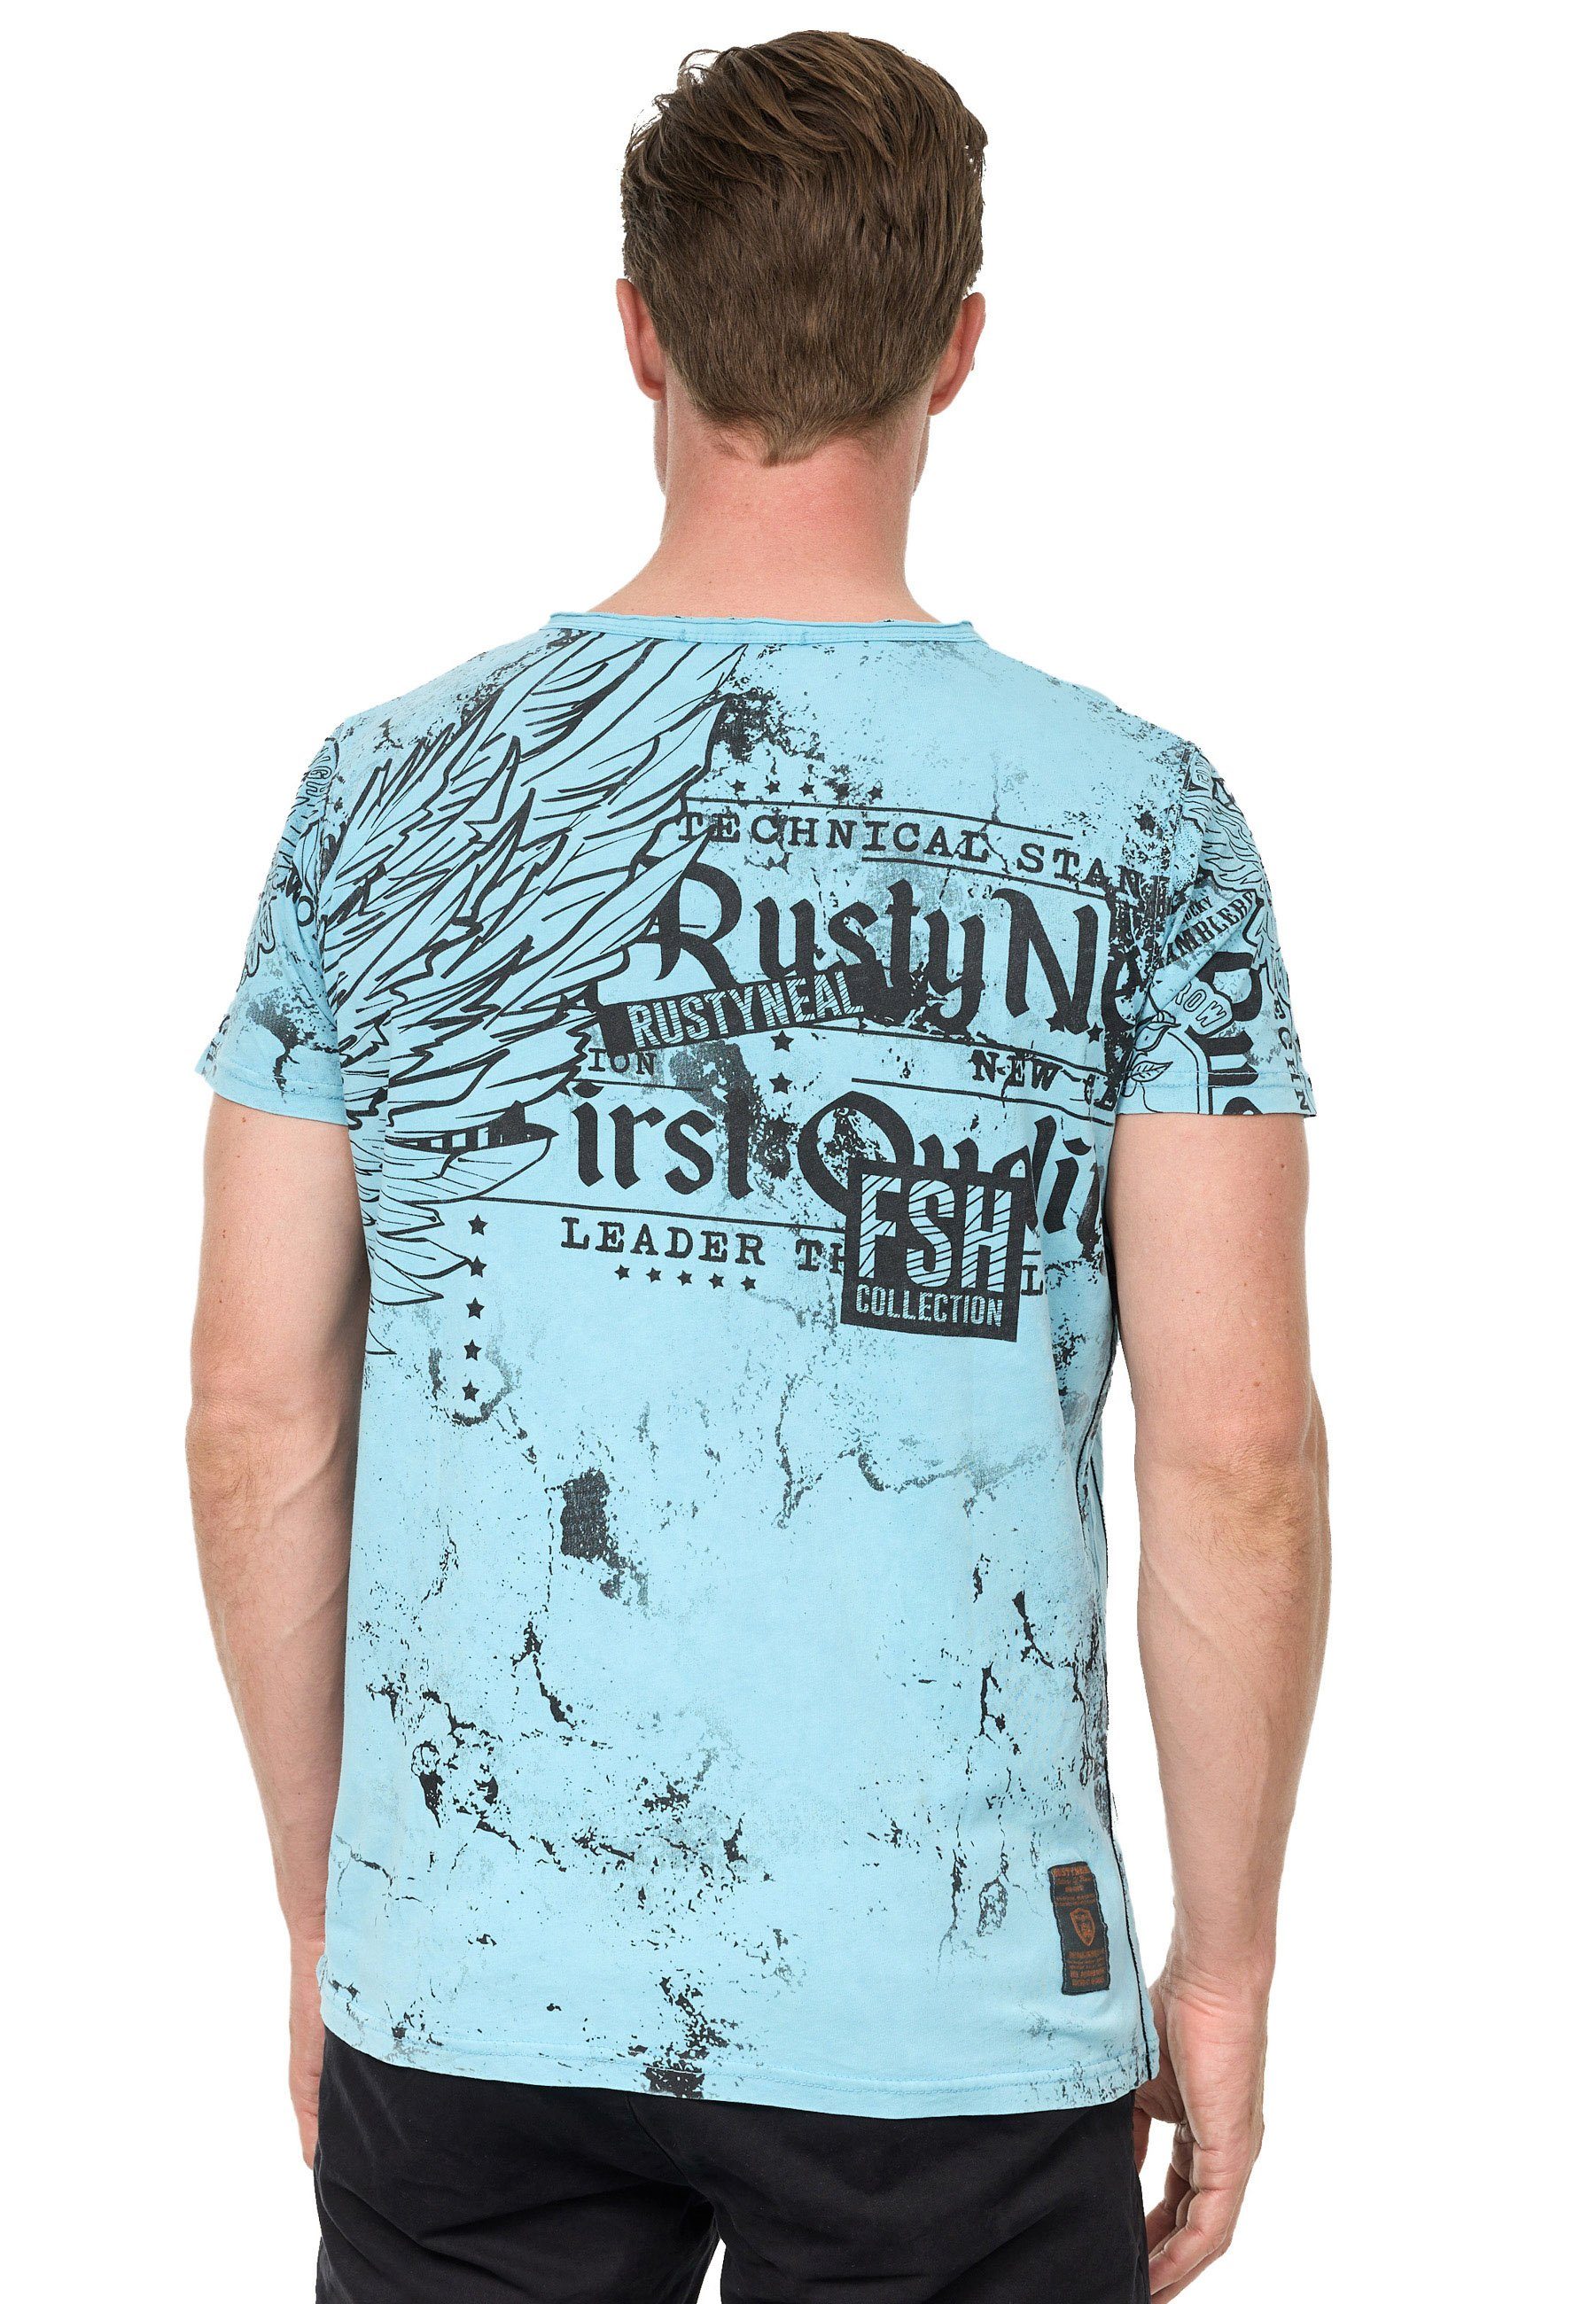 Rusty Neal T-Shirt blau Allover-Print Neal Rusty mit